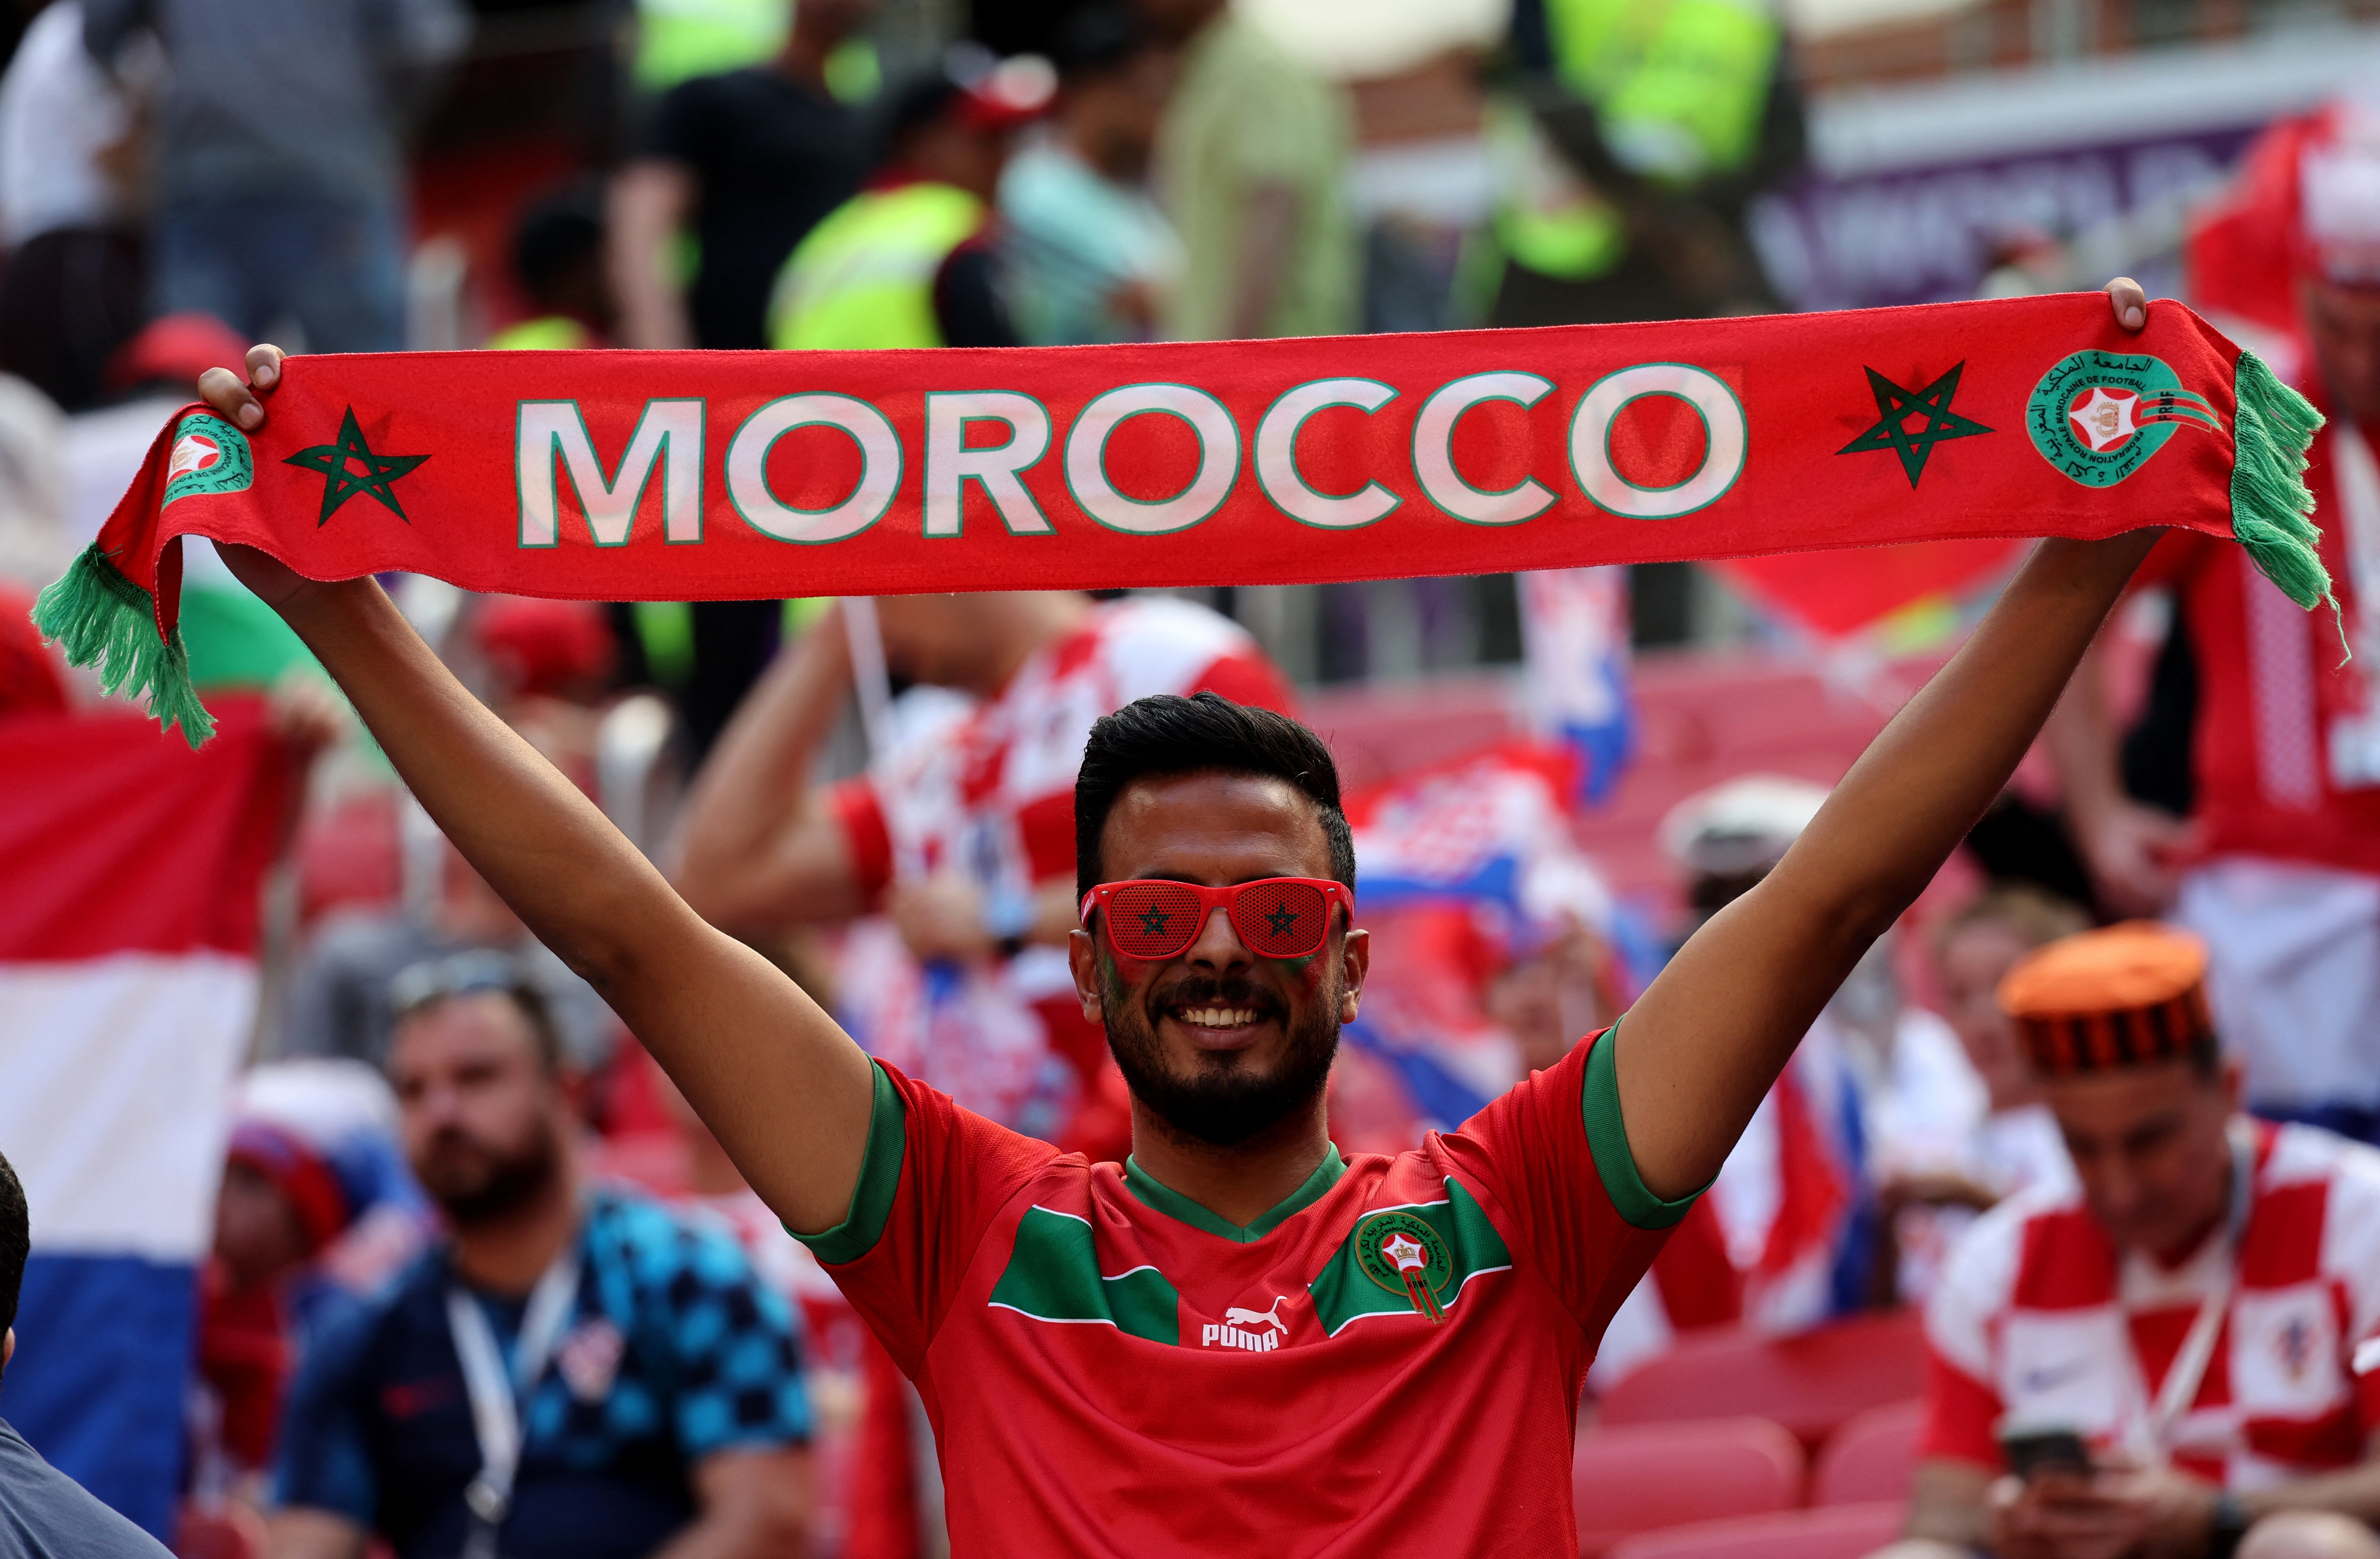 Soccer Football - FIFA World Cup Qatar 2022 - Group F - Morocco v Croatia - Al Bayt Stadium, Al Khor, Qatar - November 23, 2022 Morocco fan inside the stadium before the match REUTERS/Amr Abdallah Dalsh